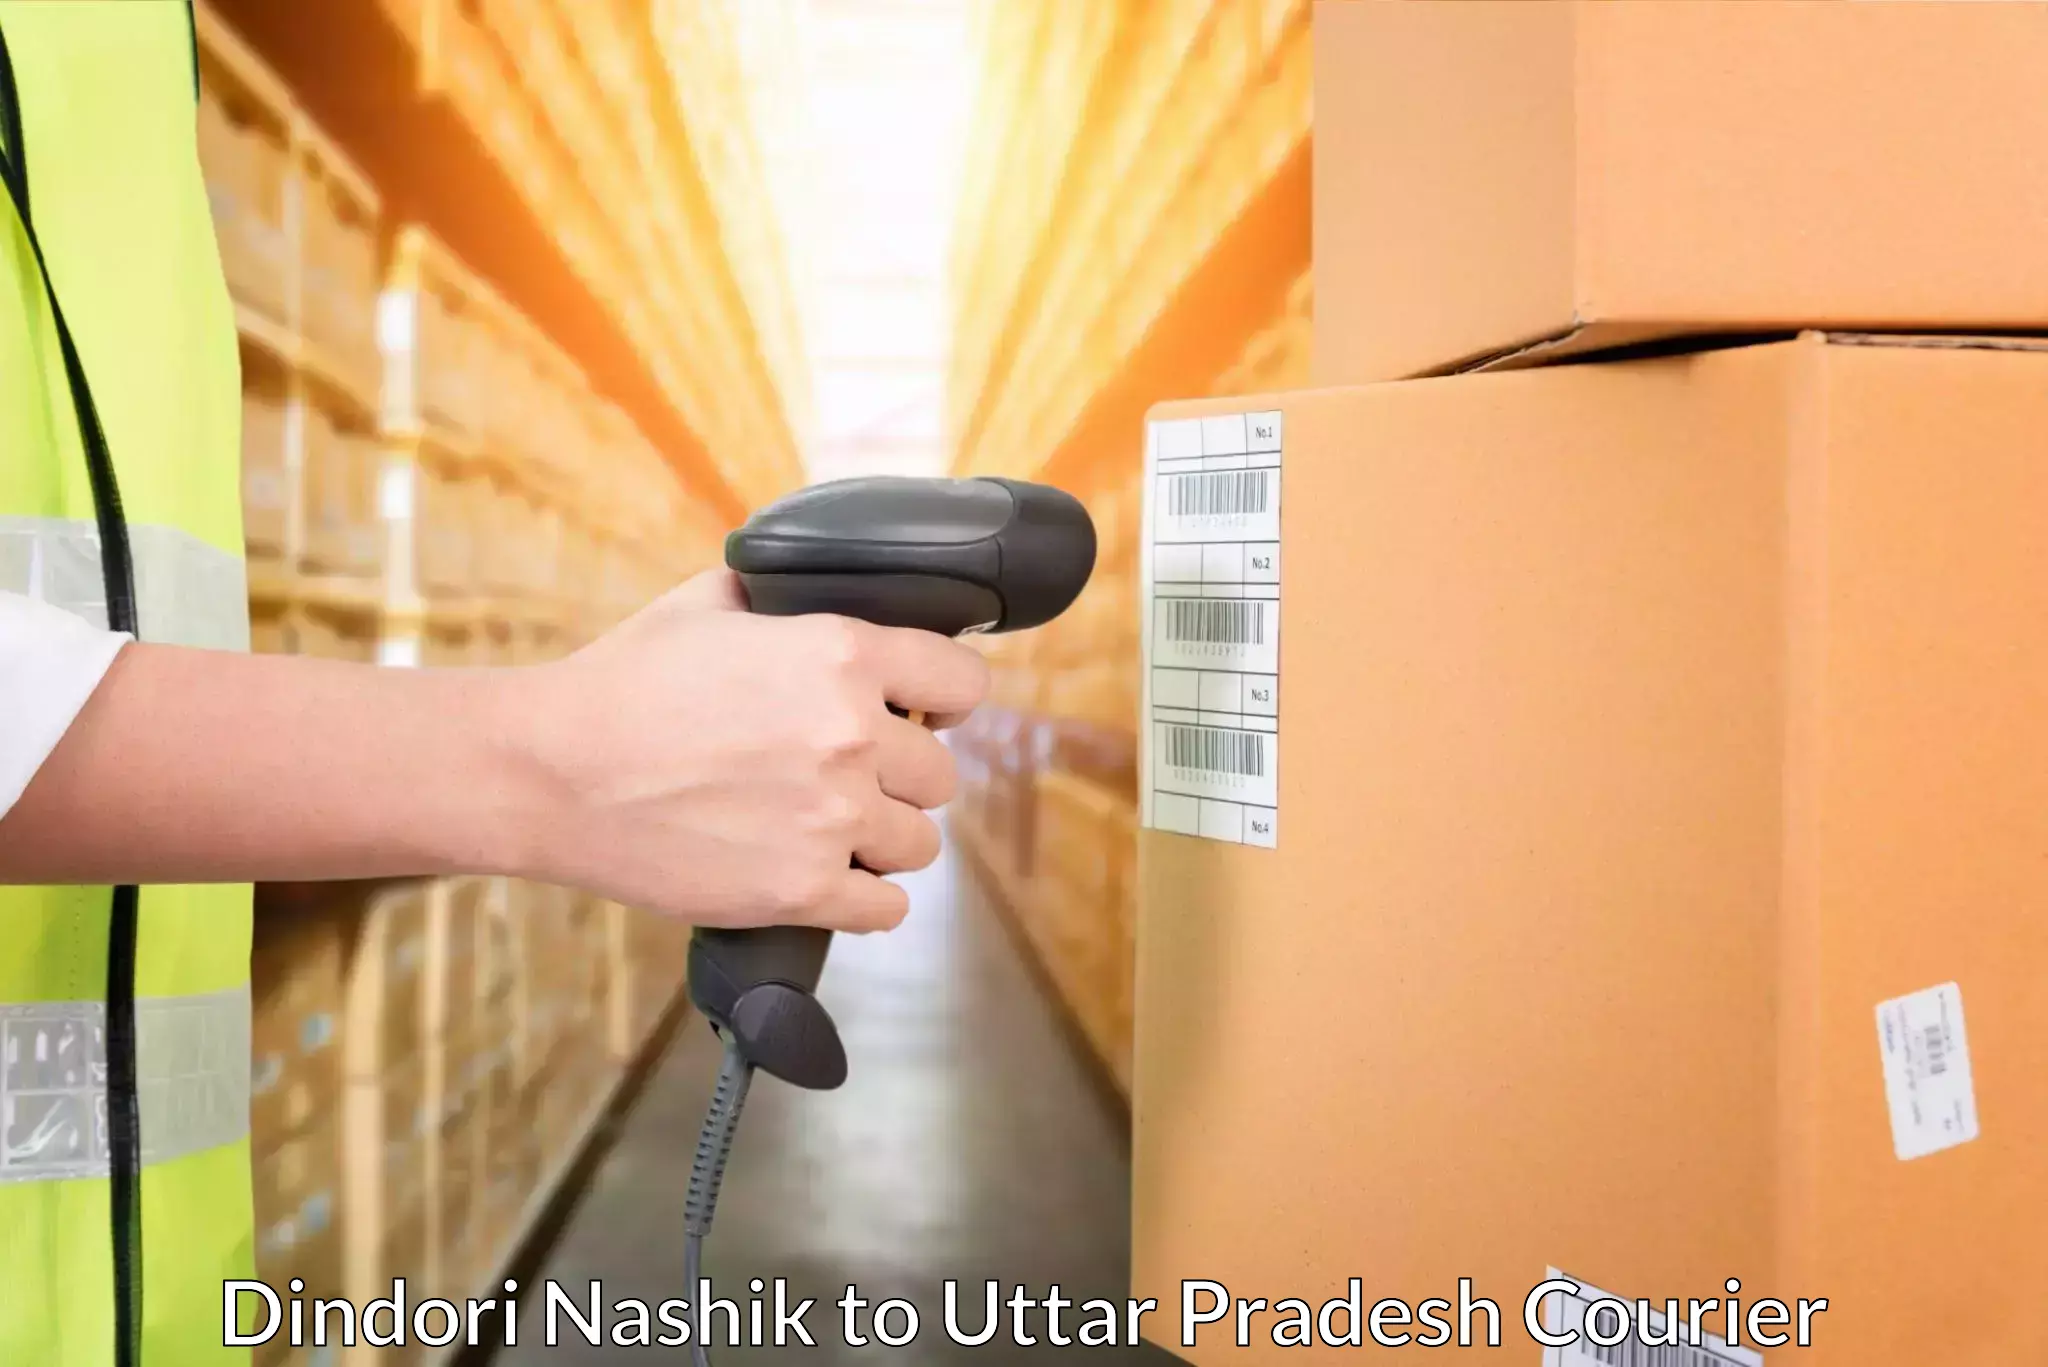 Global shipping solutions Dindori Nashik to Shohratgarh